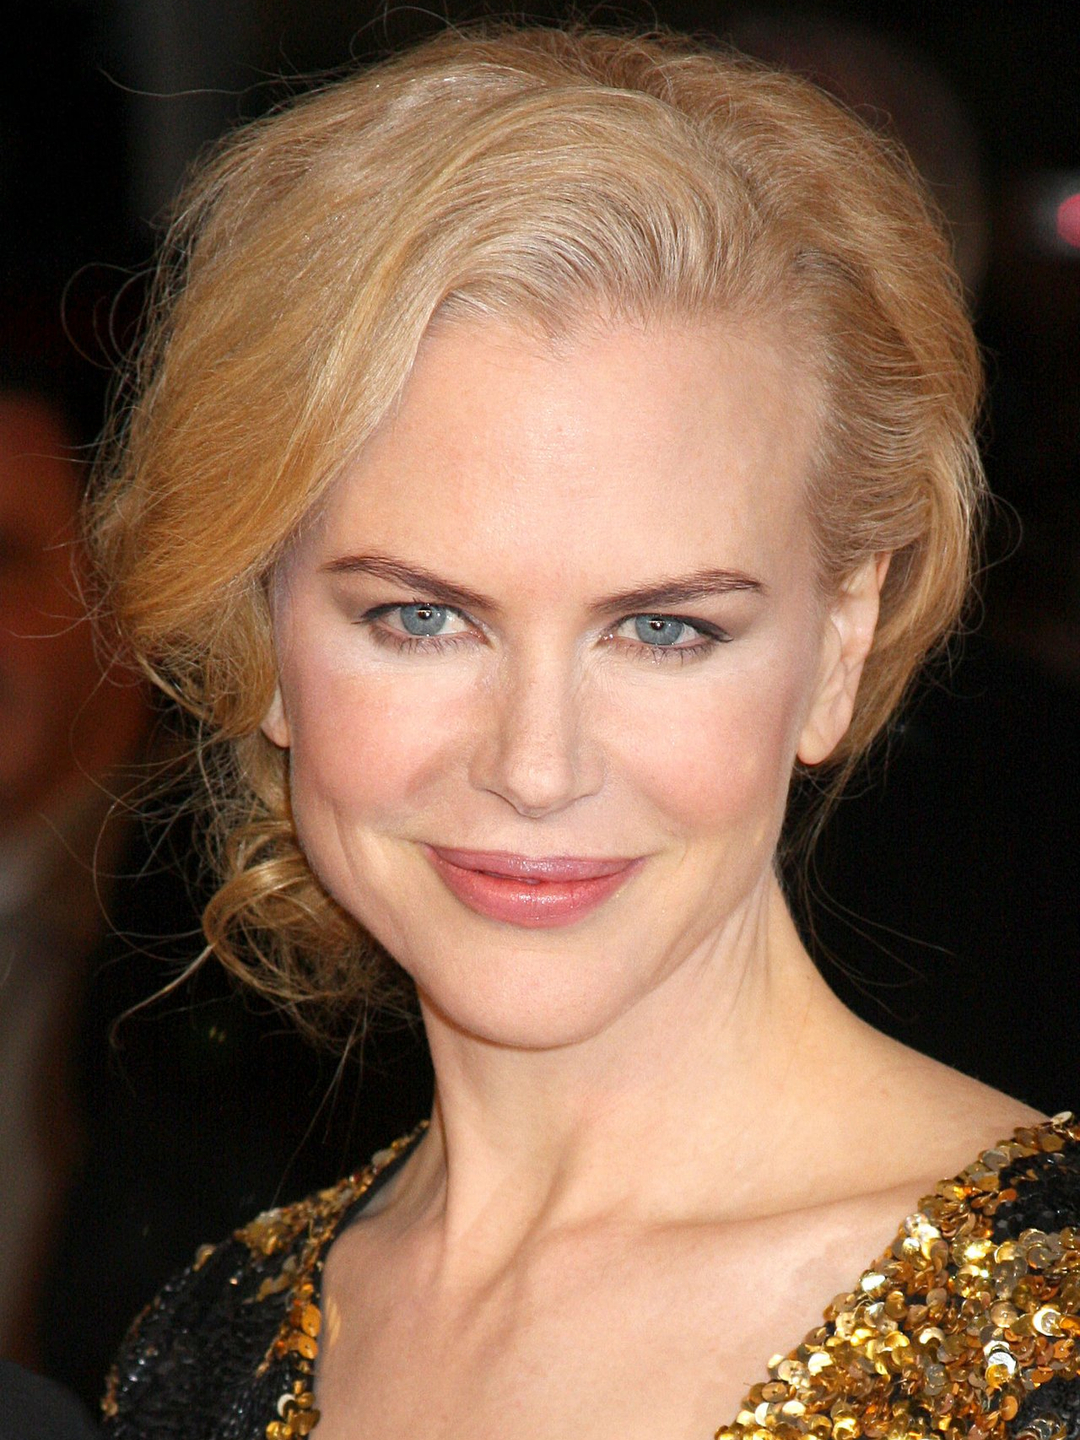 Nicole Kidman current look